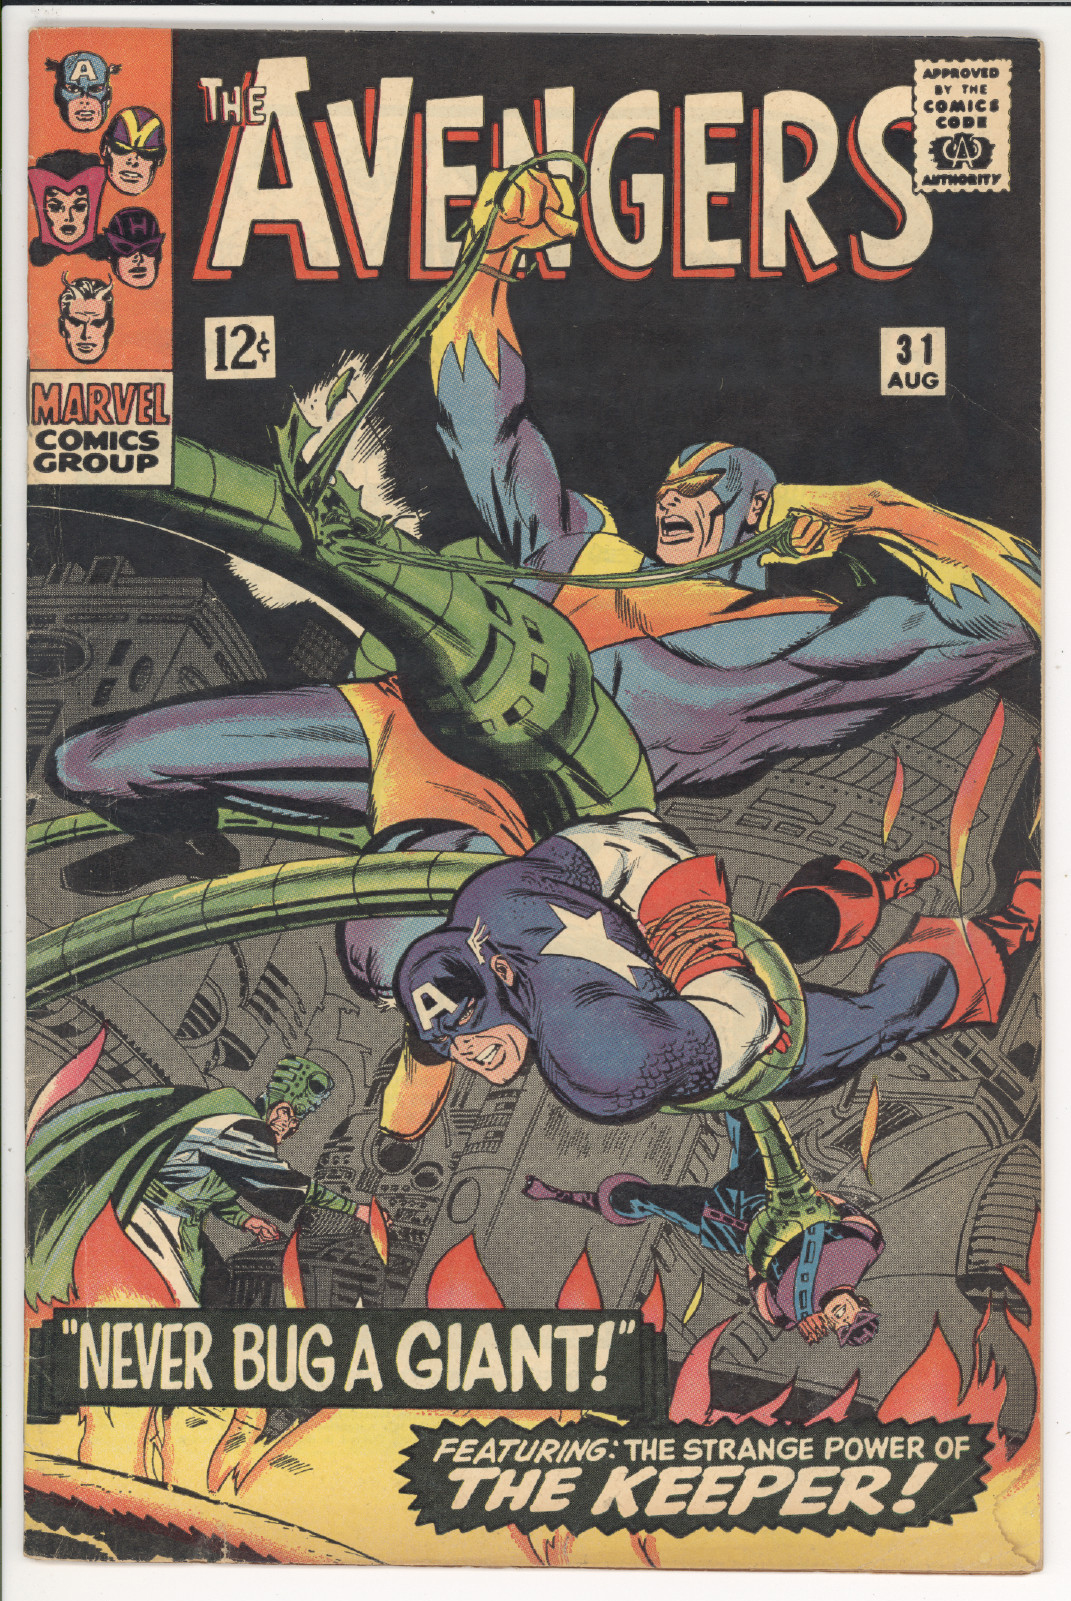 Avengers #31 front